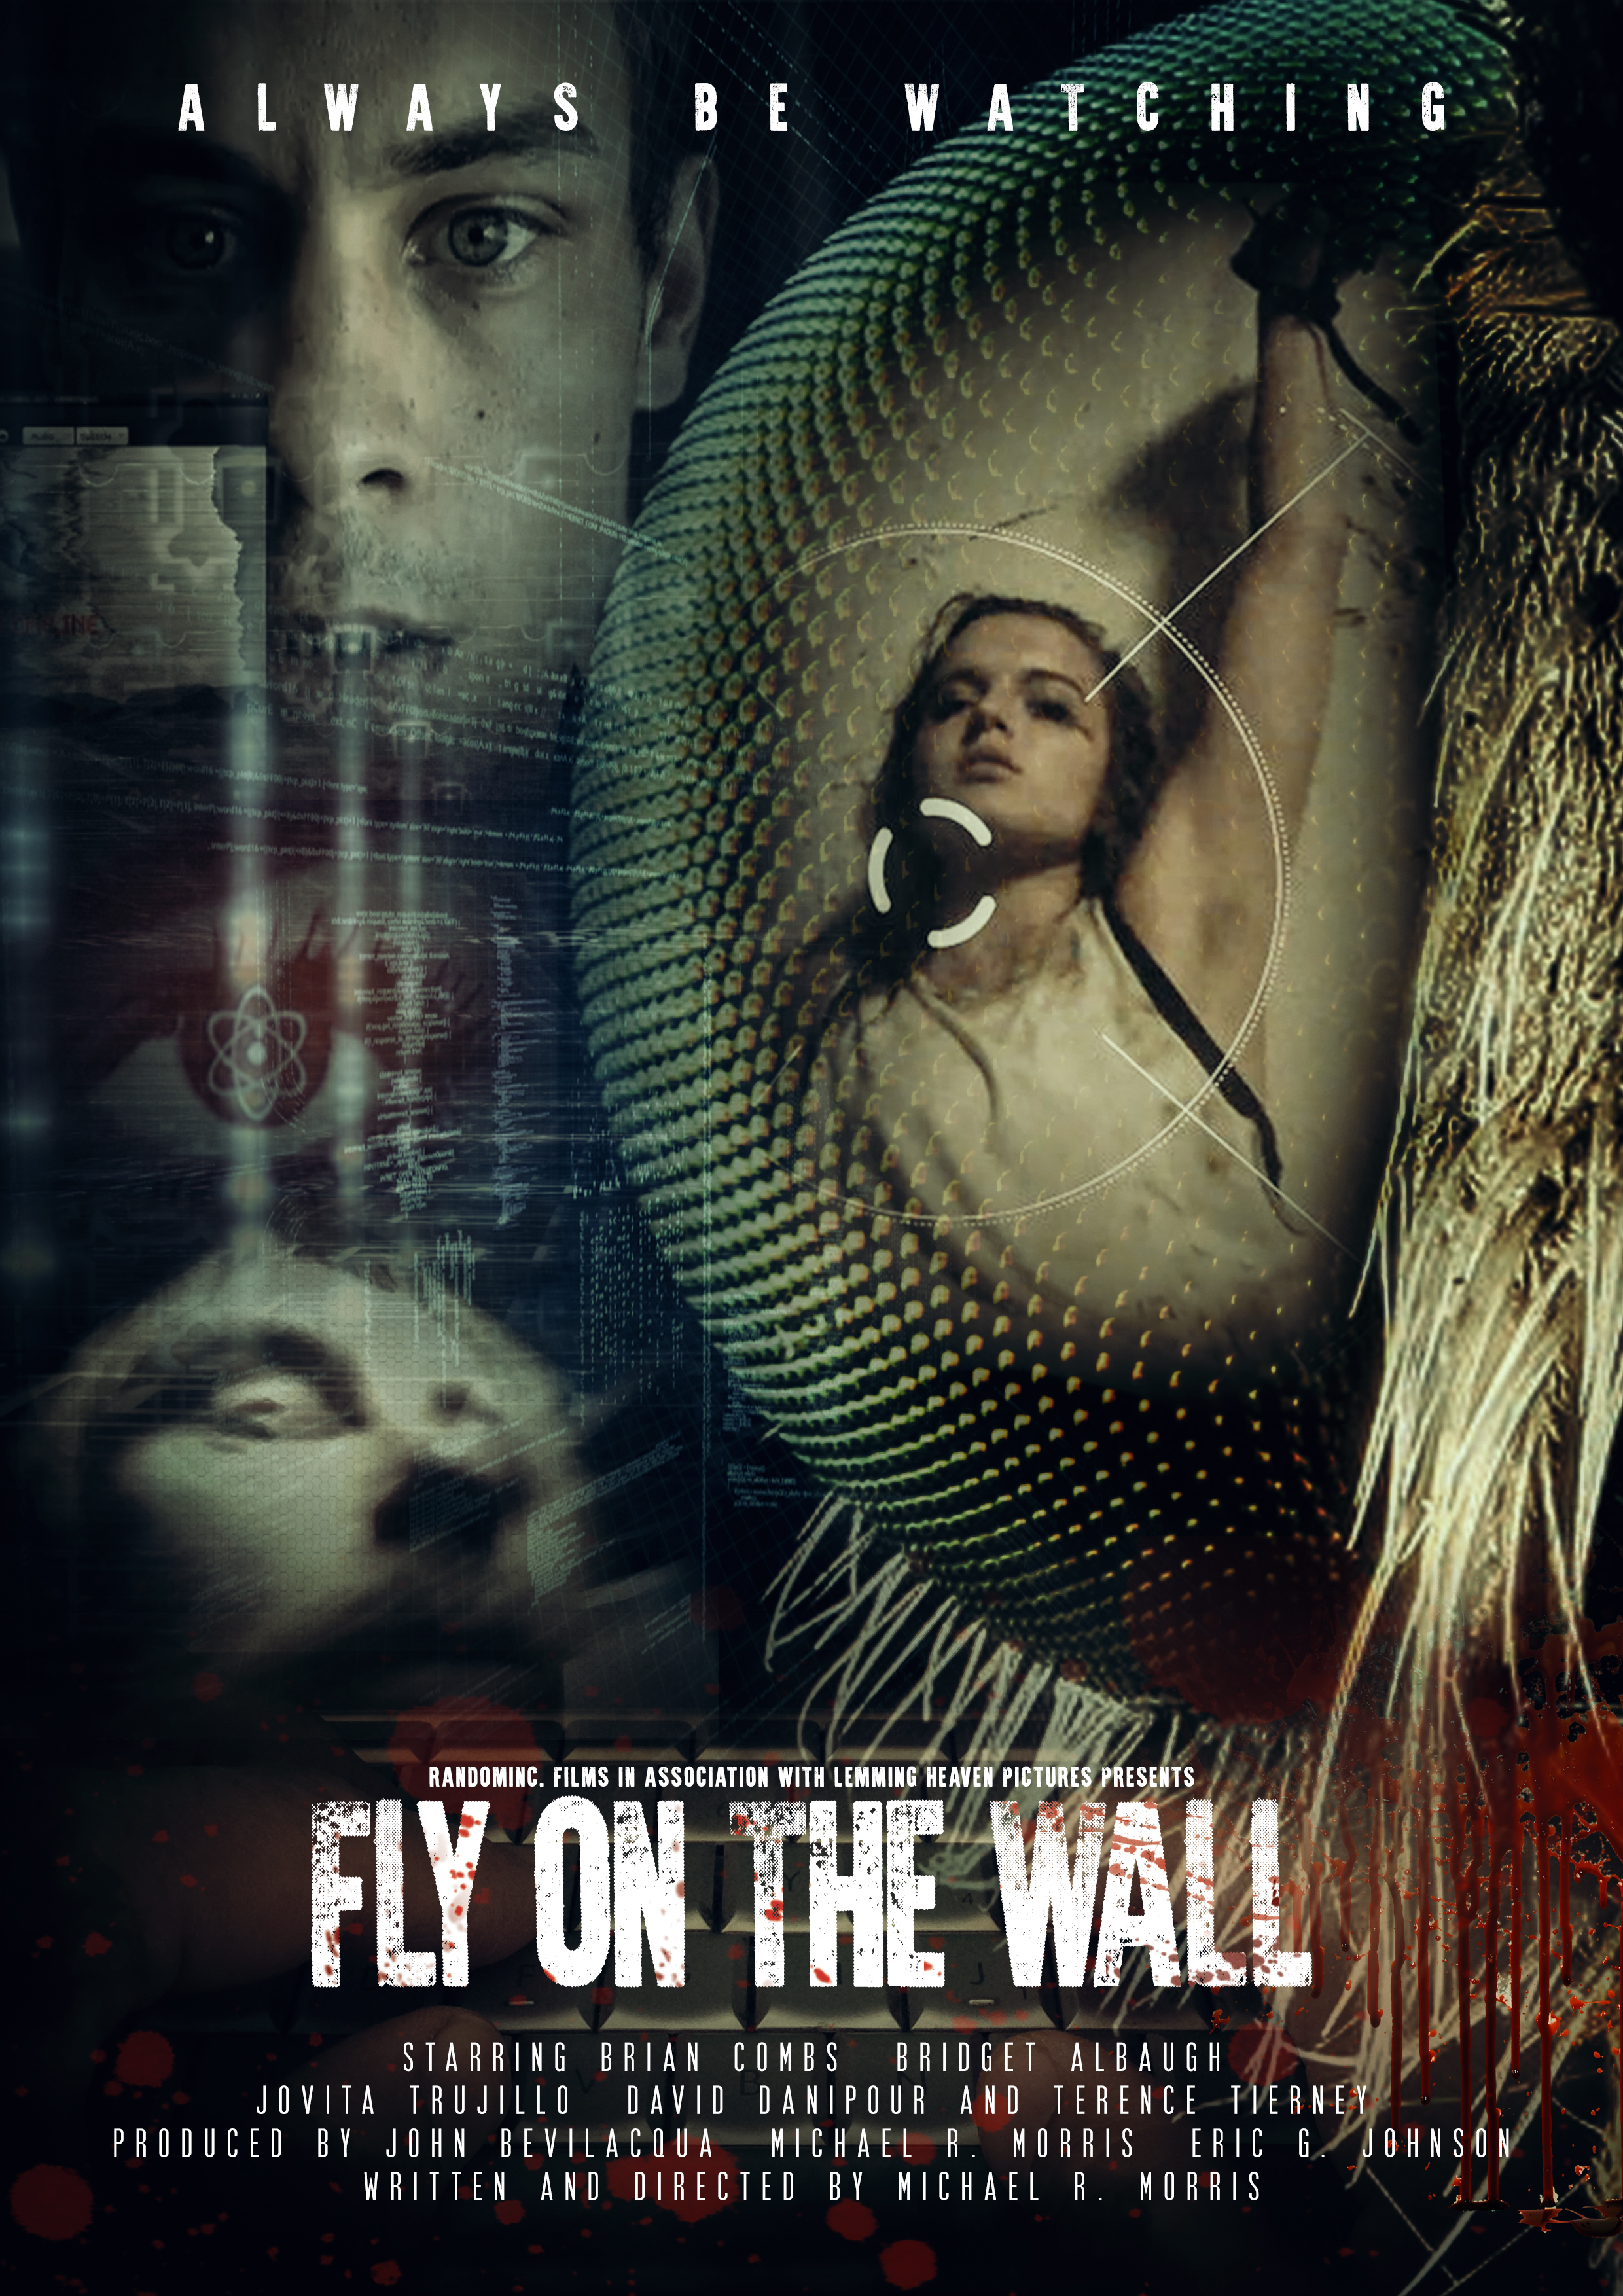 Nonton film Fly on the Wall layarkaca21 indoxx1 ganool online streaming terbaru